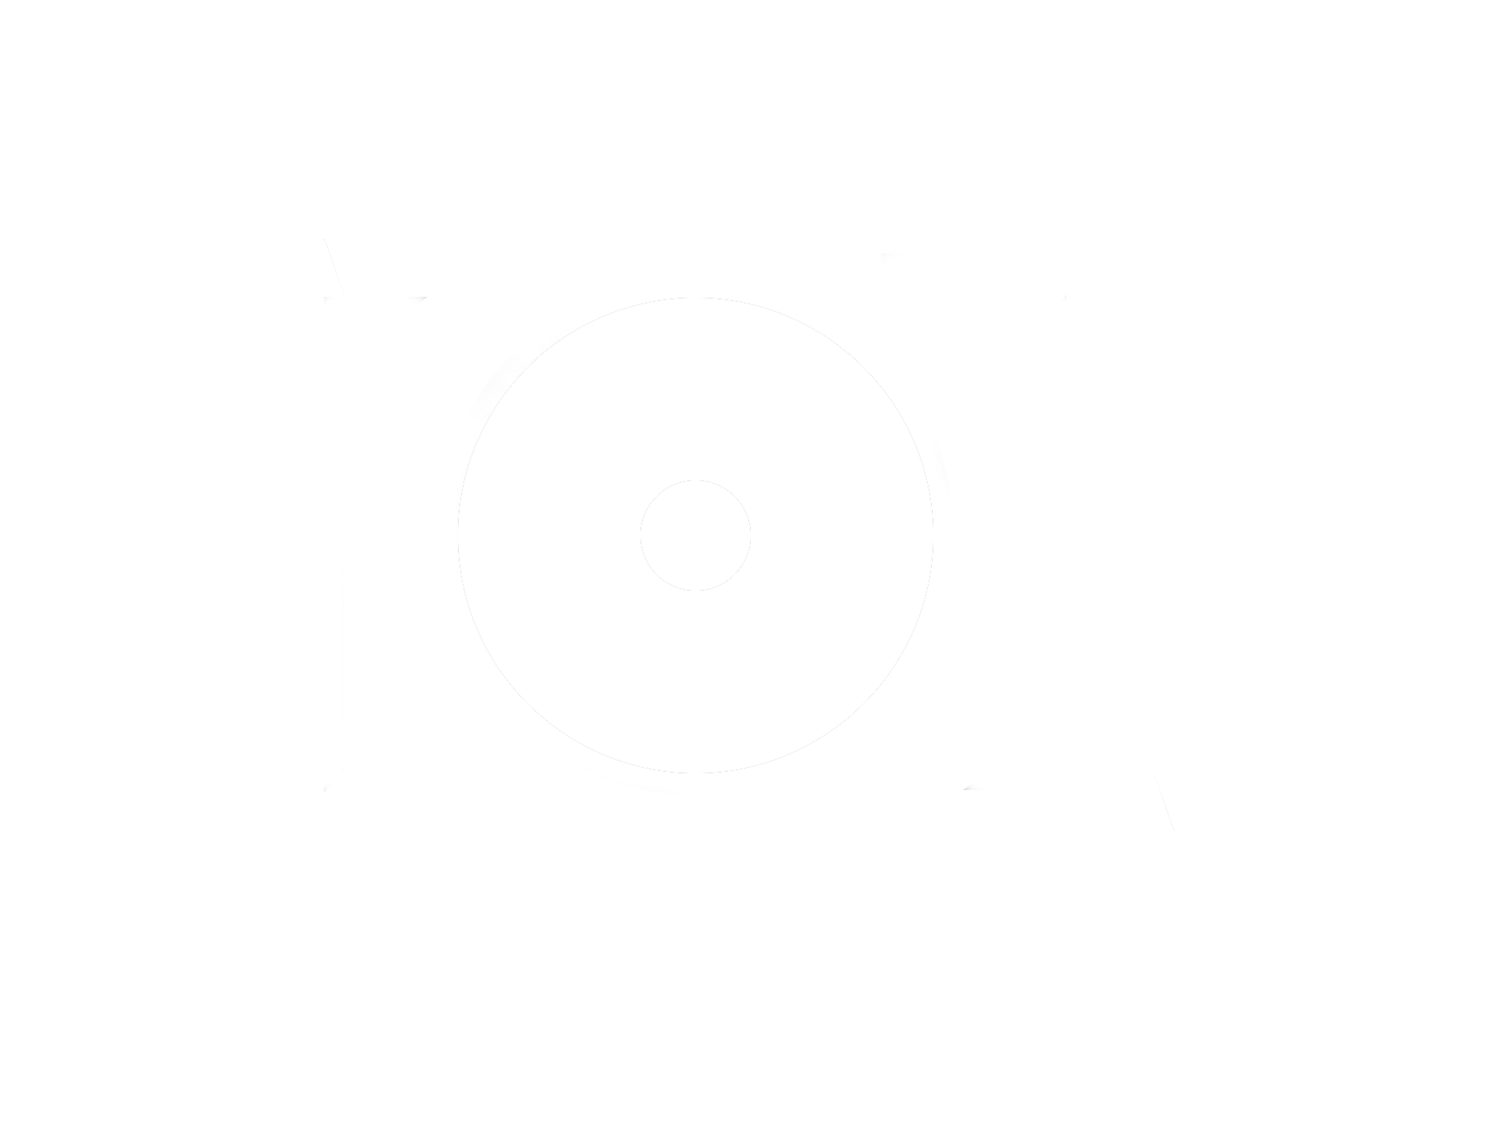 Robert Grabczewski Photography